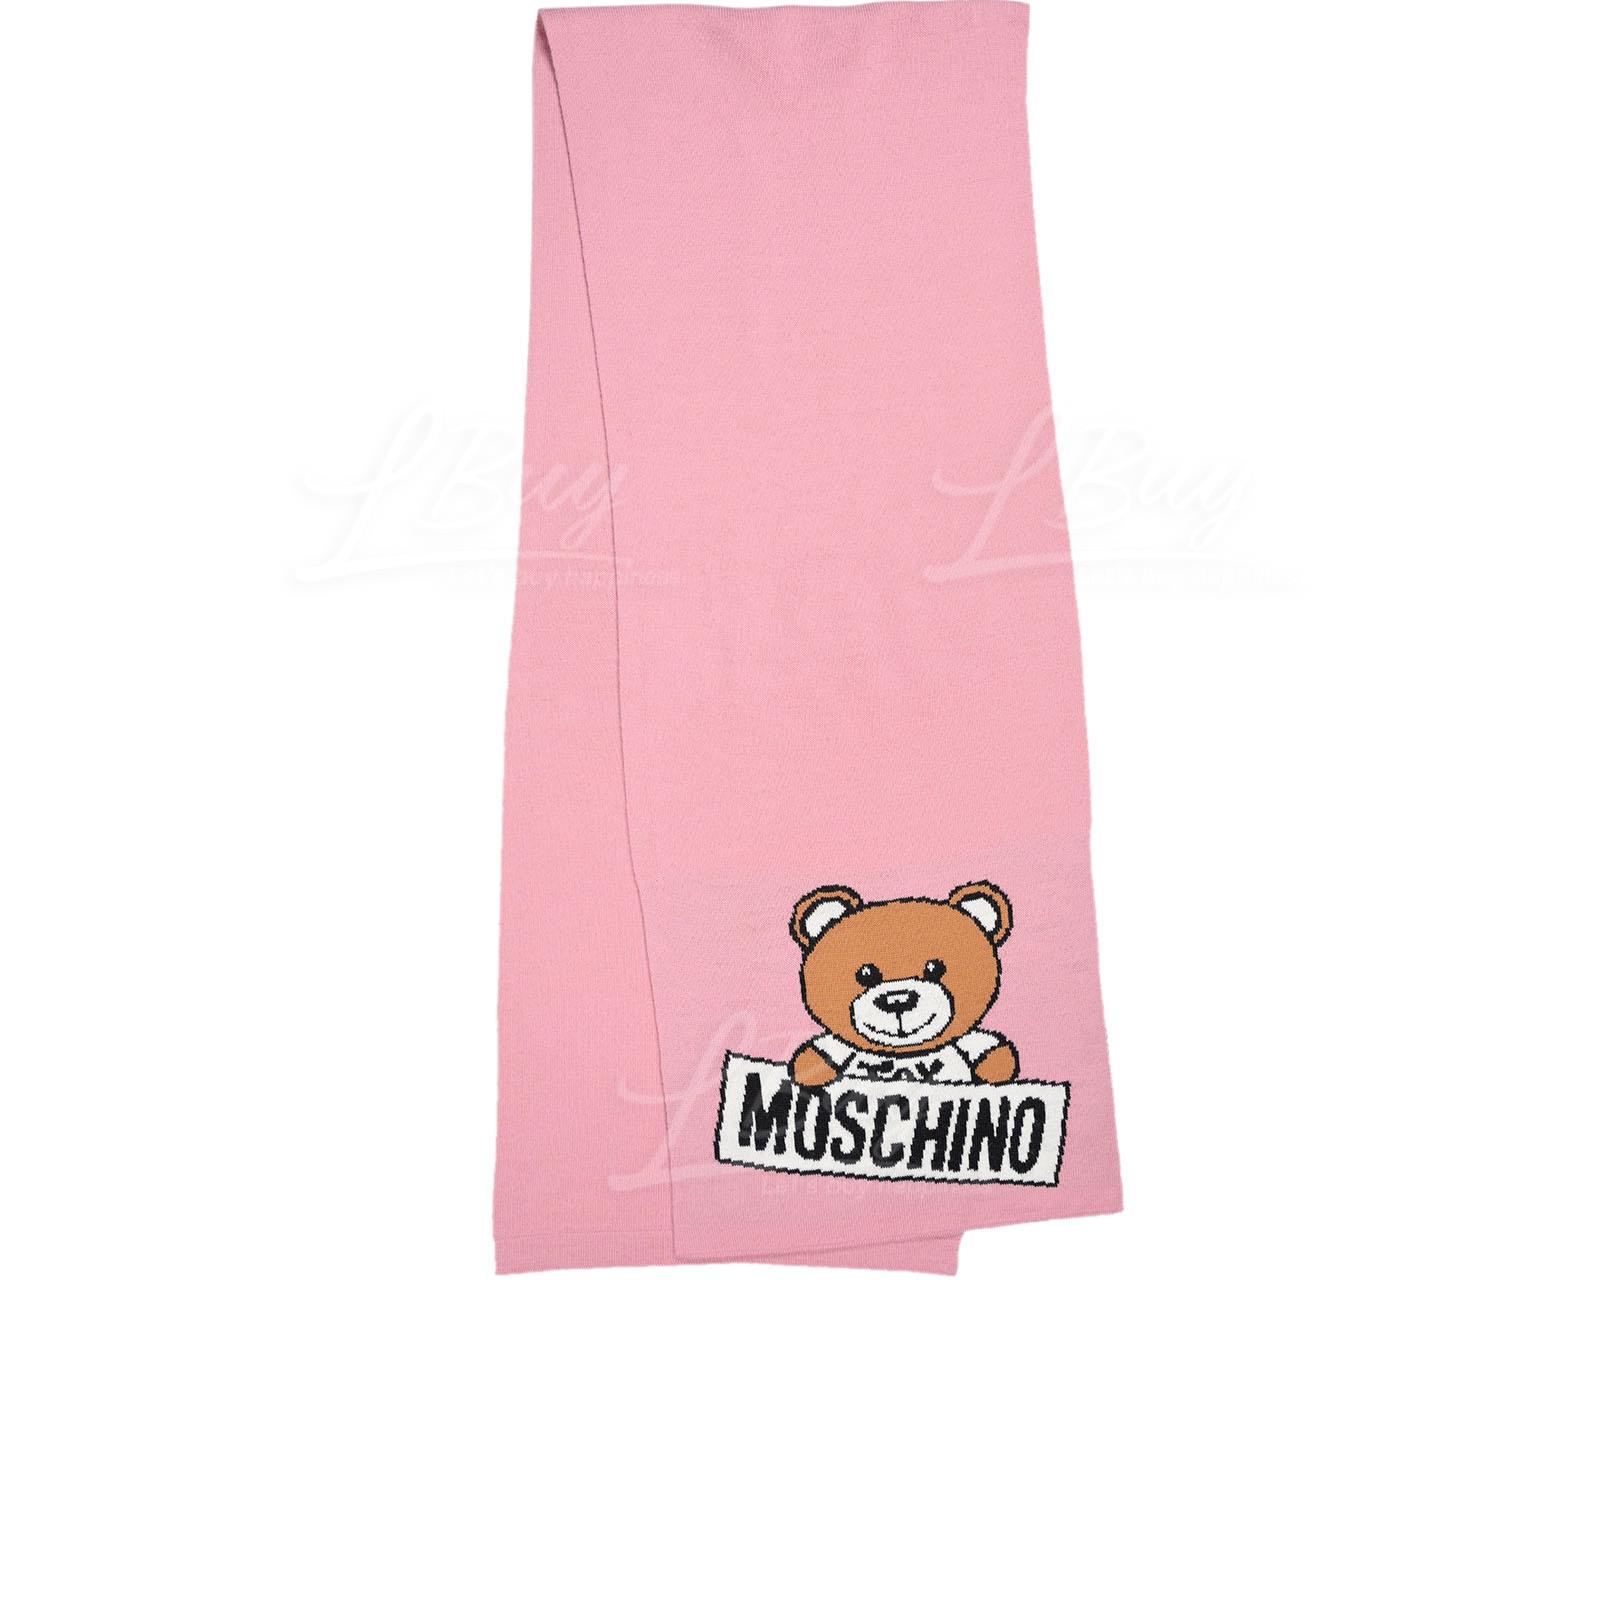 Moschino 泰迪熊大Logo粉红色围巾